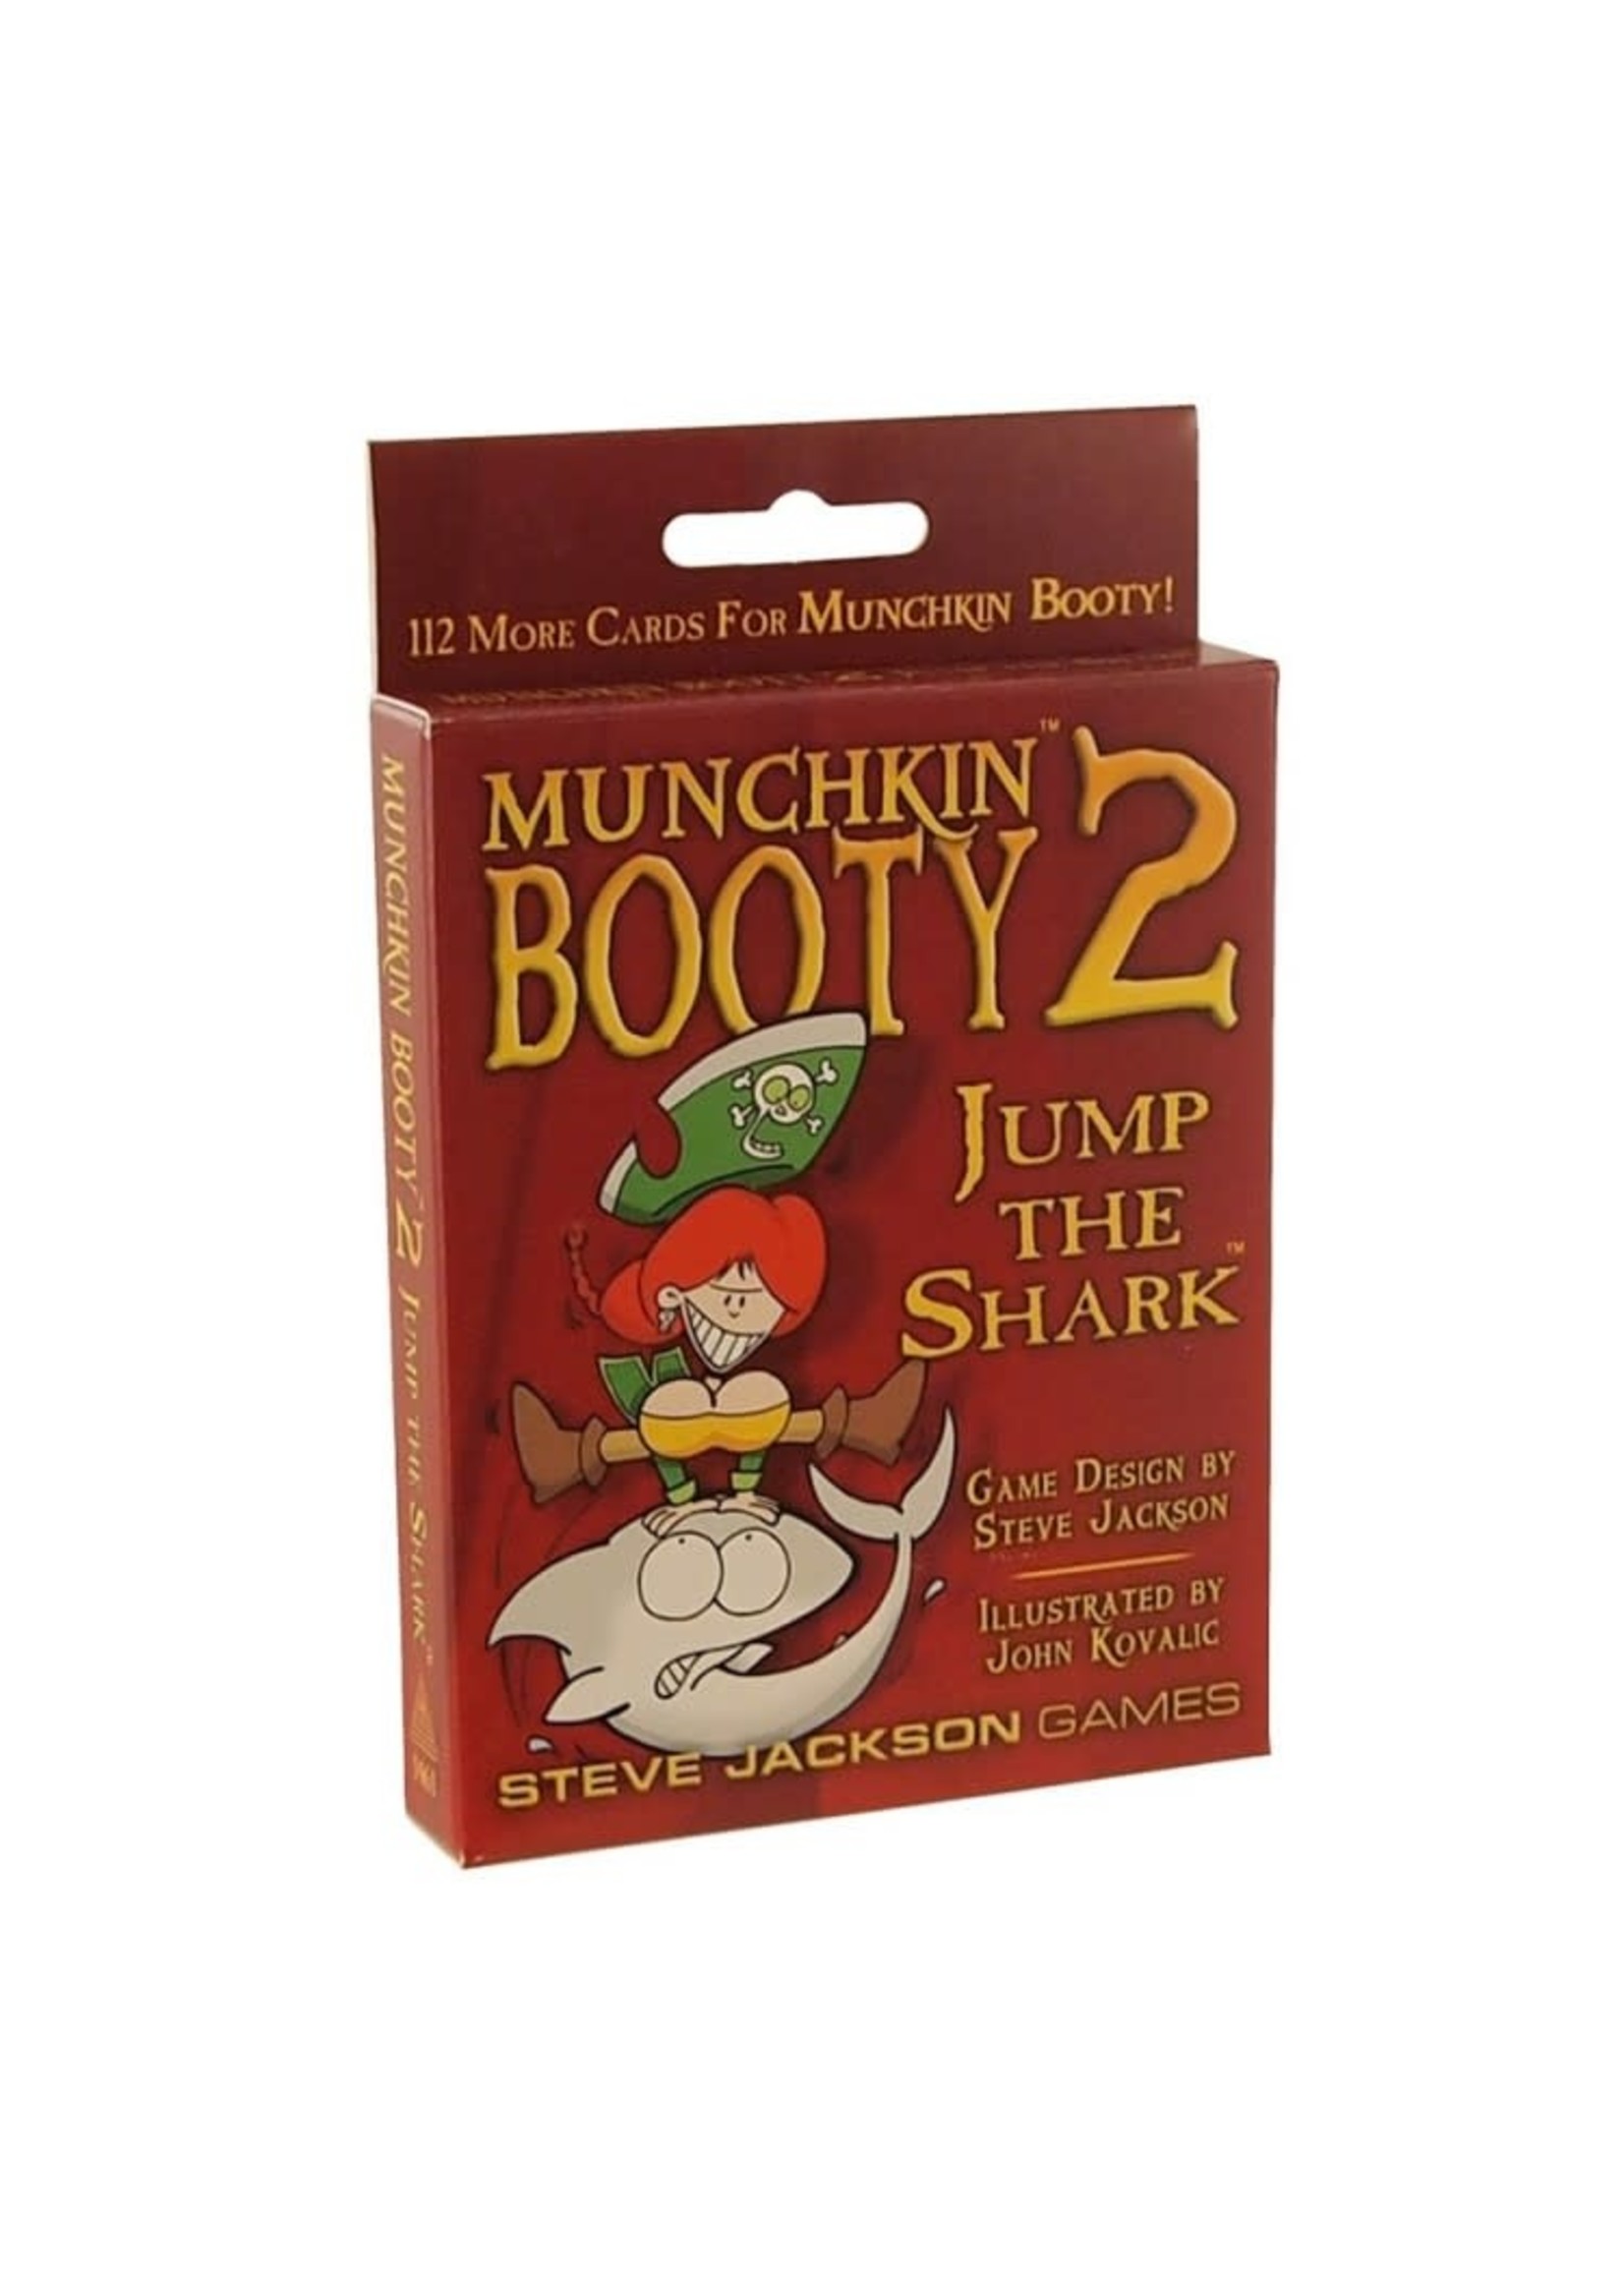 Steve Jackson Games Munchkin Booty 2, Jump the Shark